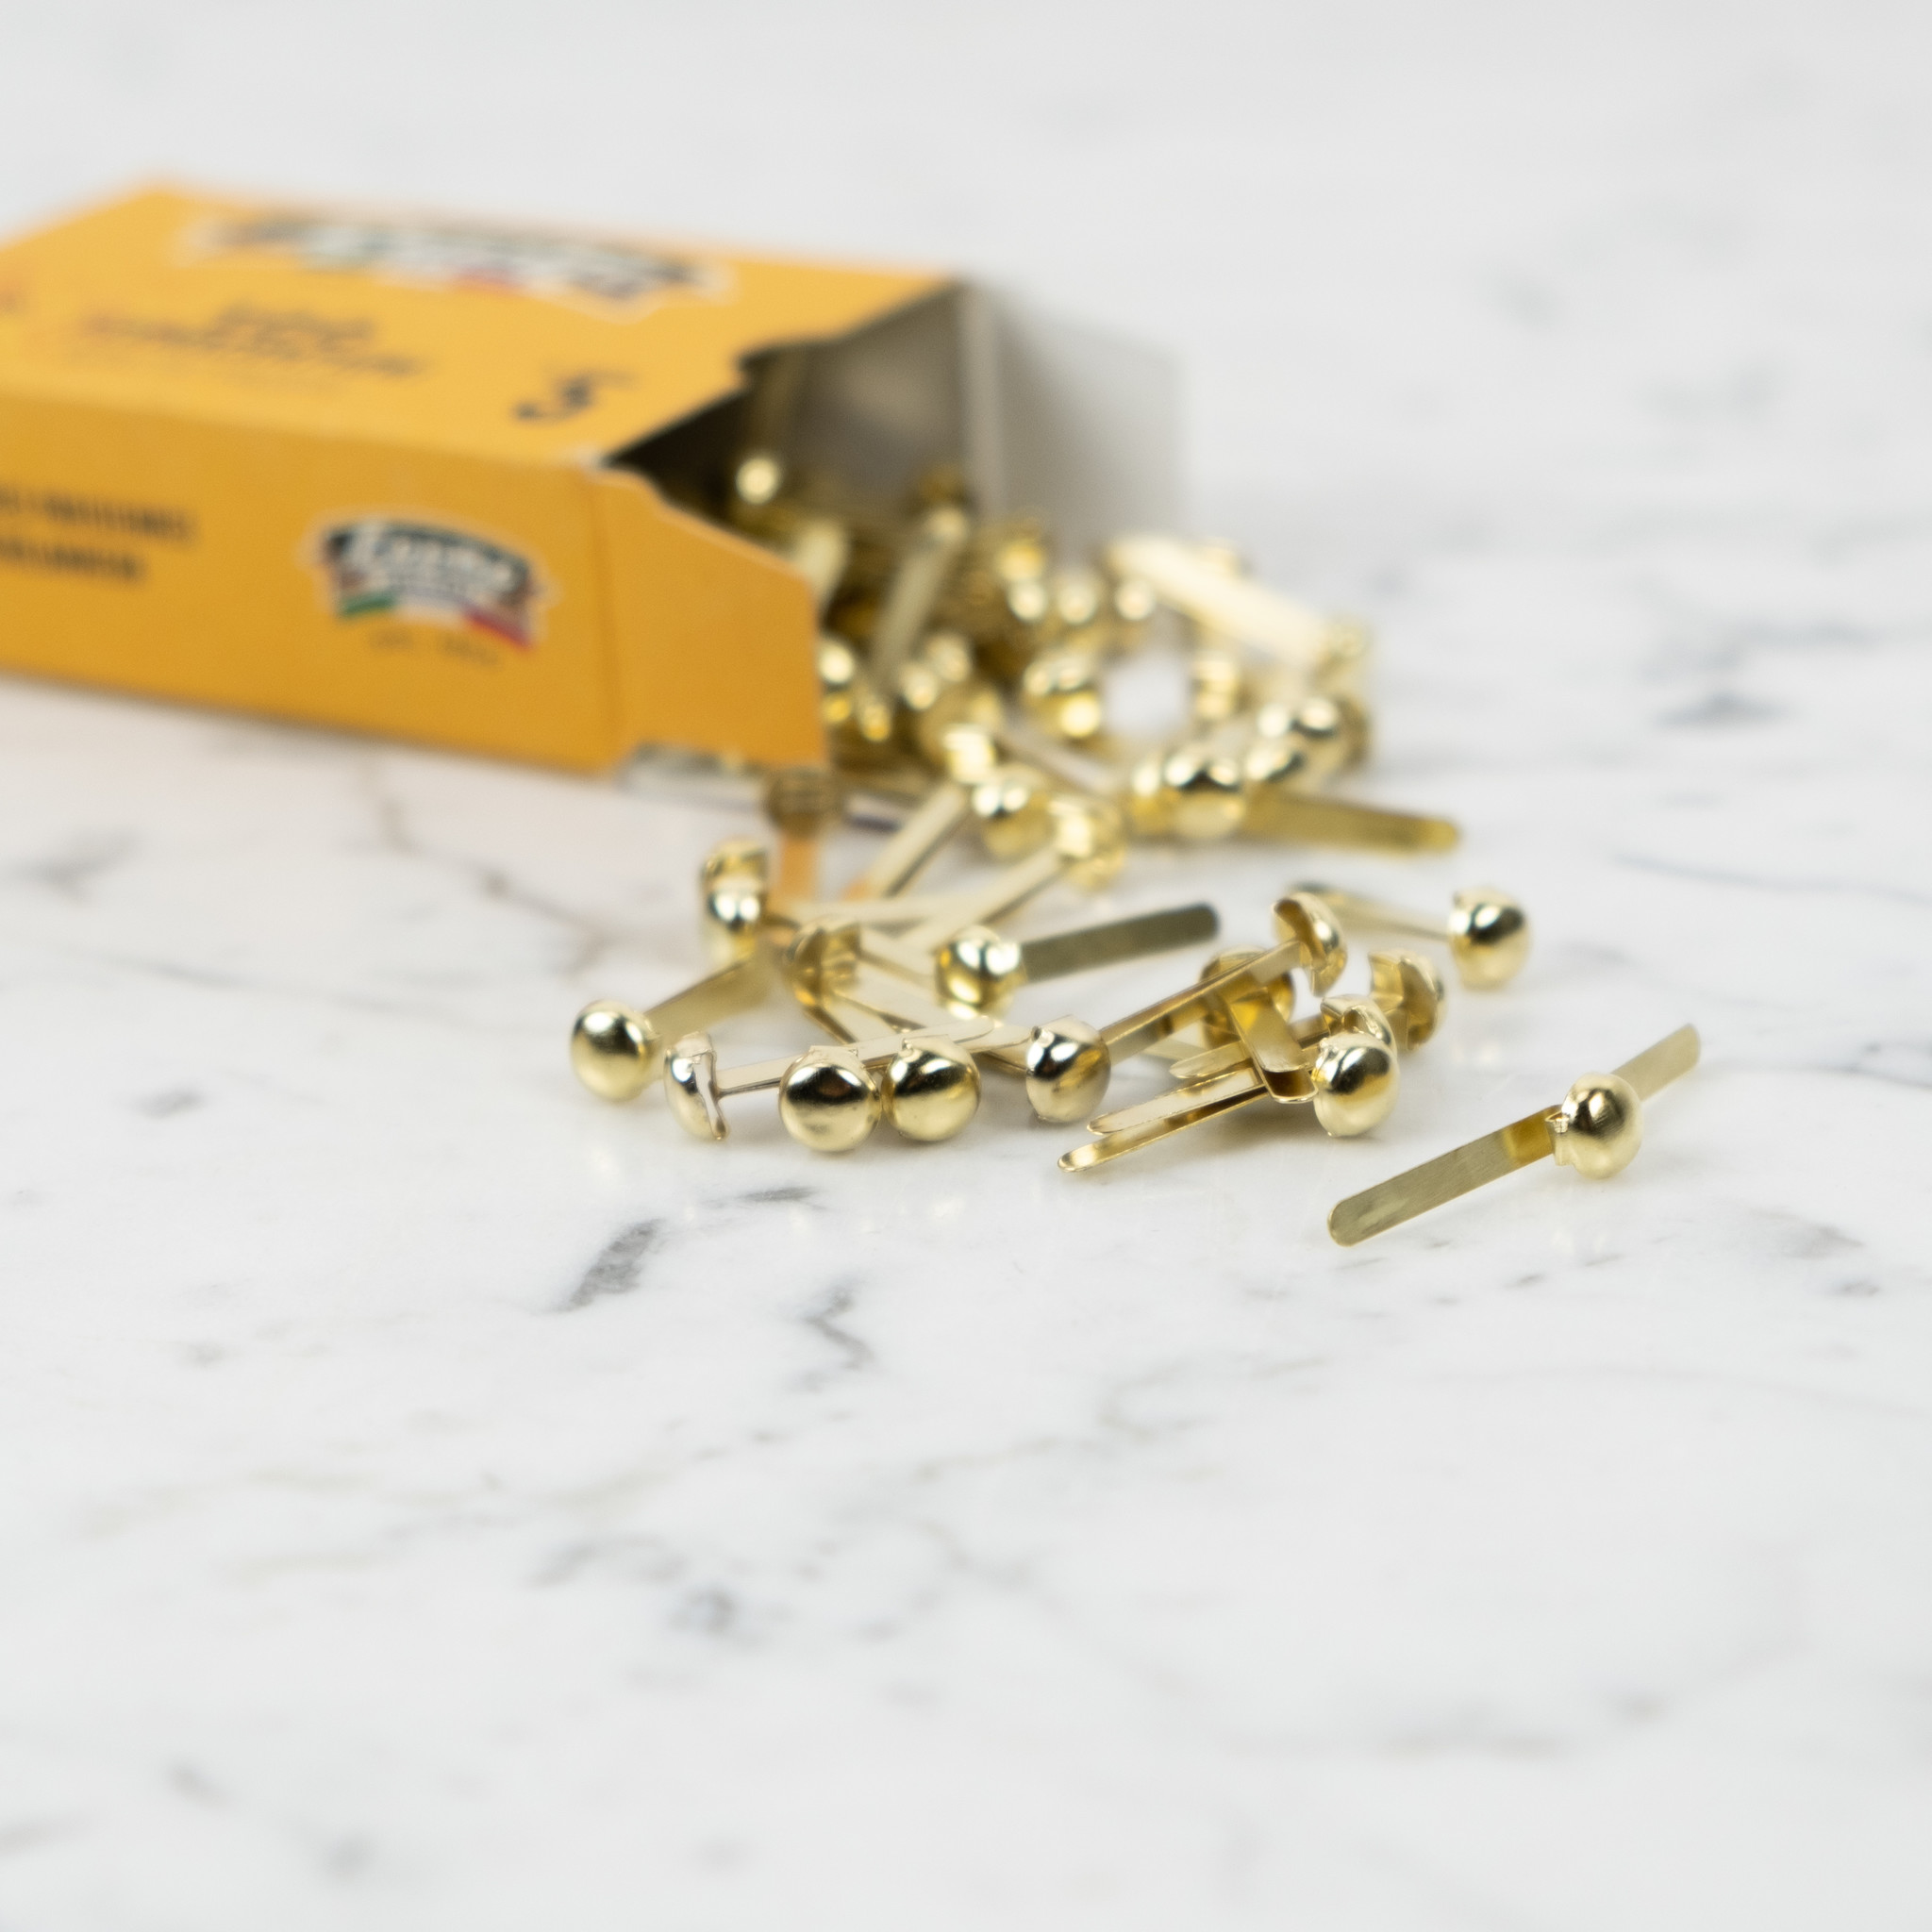 Leone Brass Paper Fasteners - 100 Count - Size 5